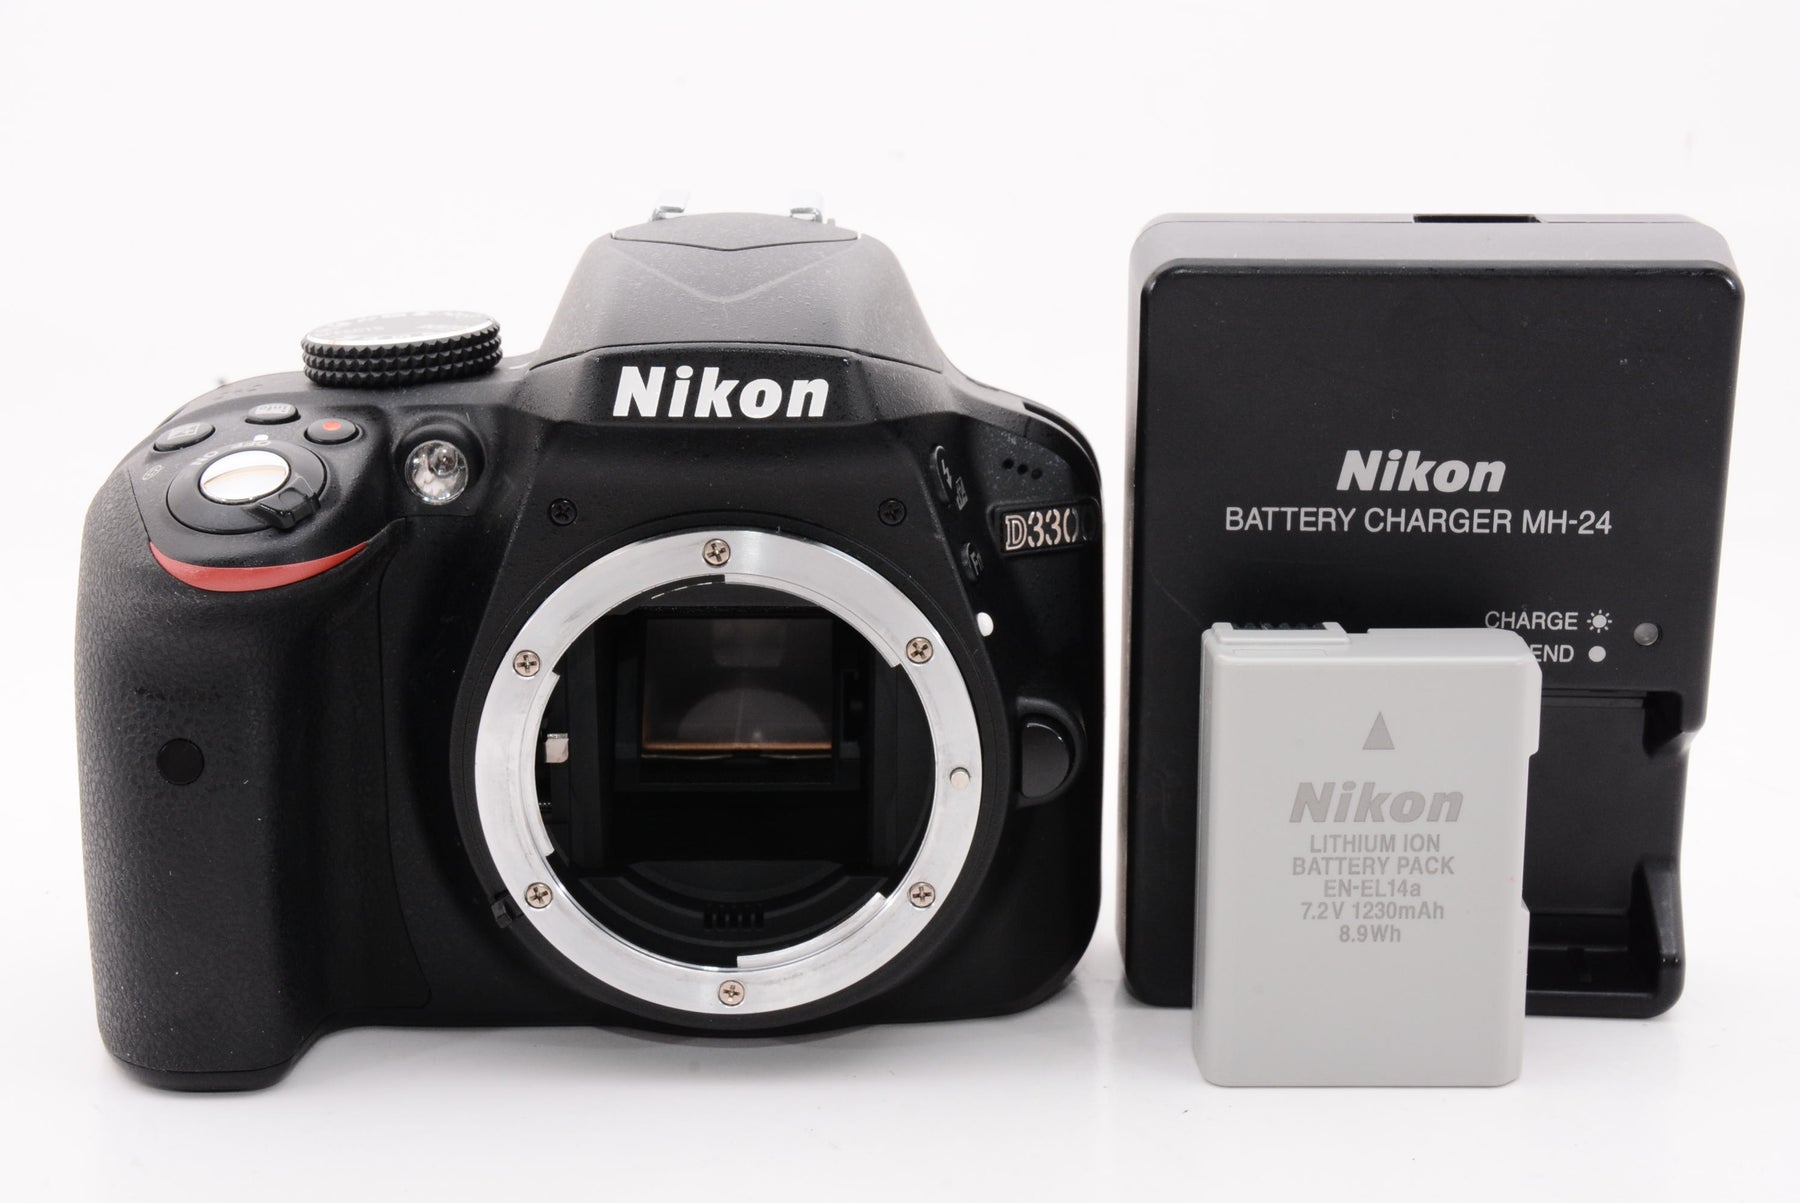 Nikon デジタル一眼レフカメラ D3300 ダブルズームキット - カメラ